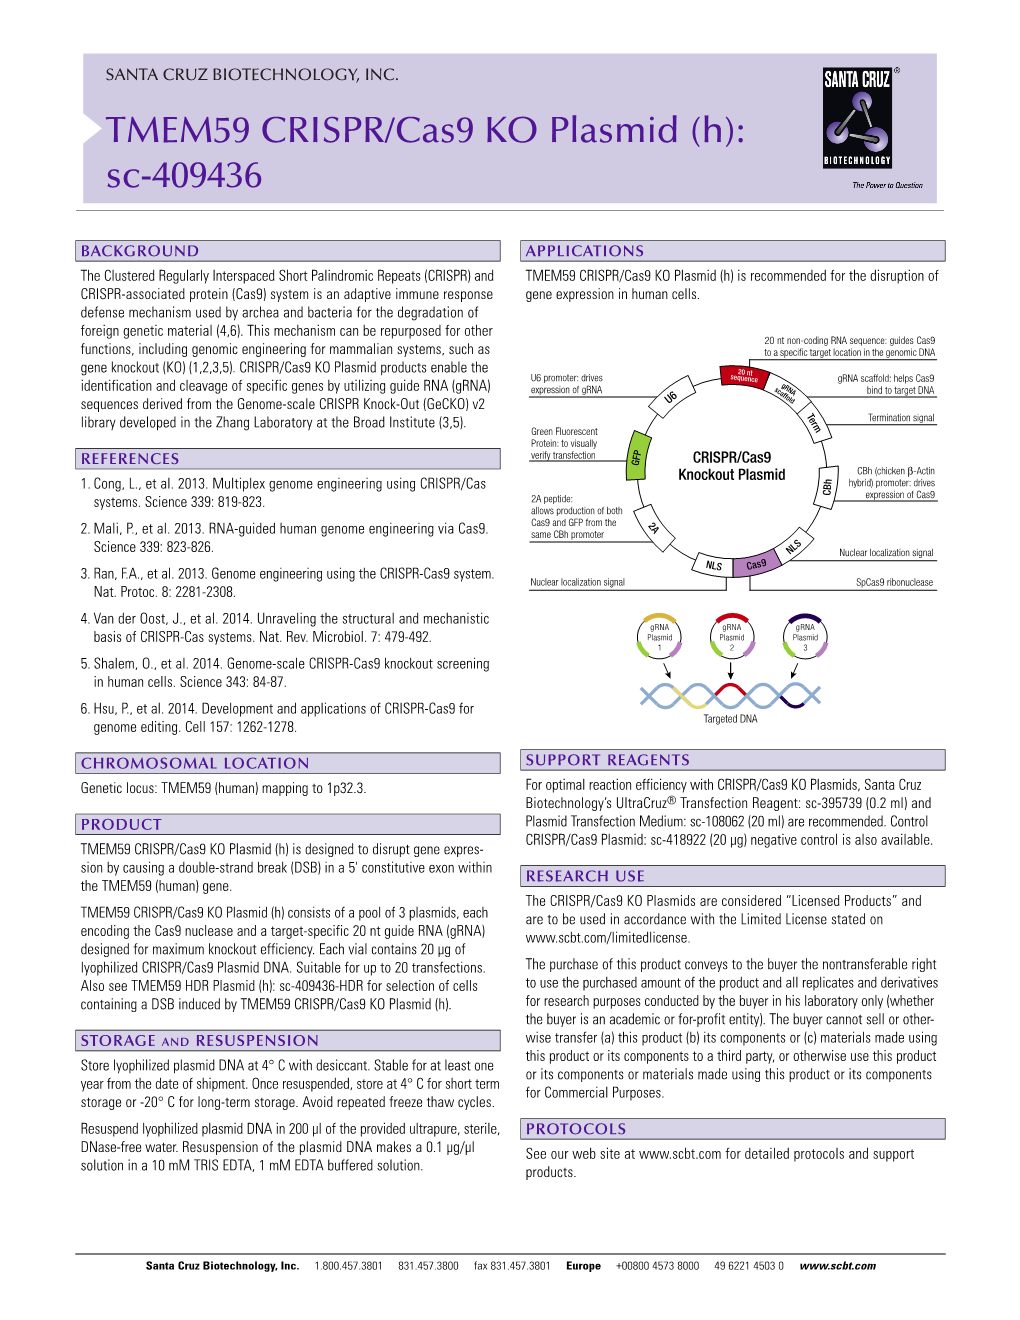 TMEM59 CRISPR/Cas9 KO Plasmid (H): Sc-409436